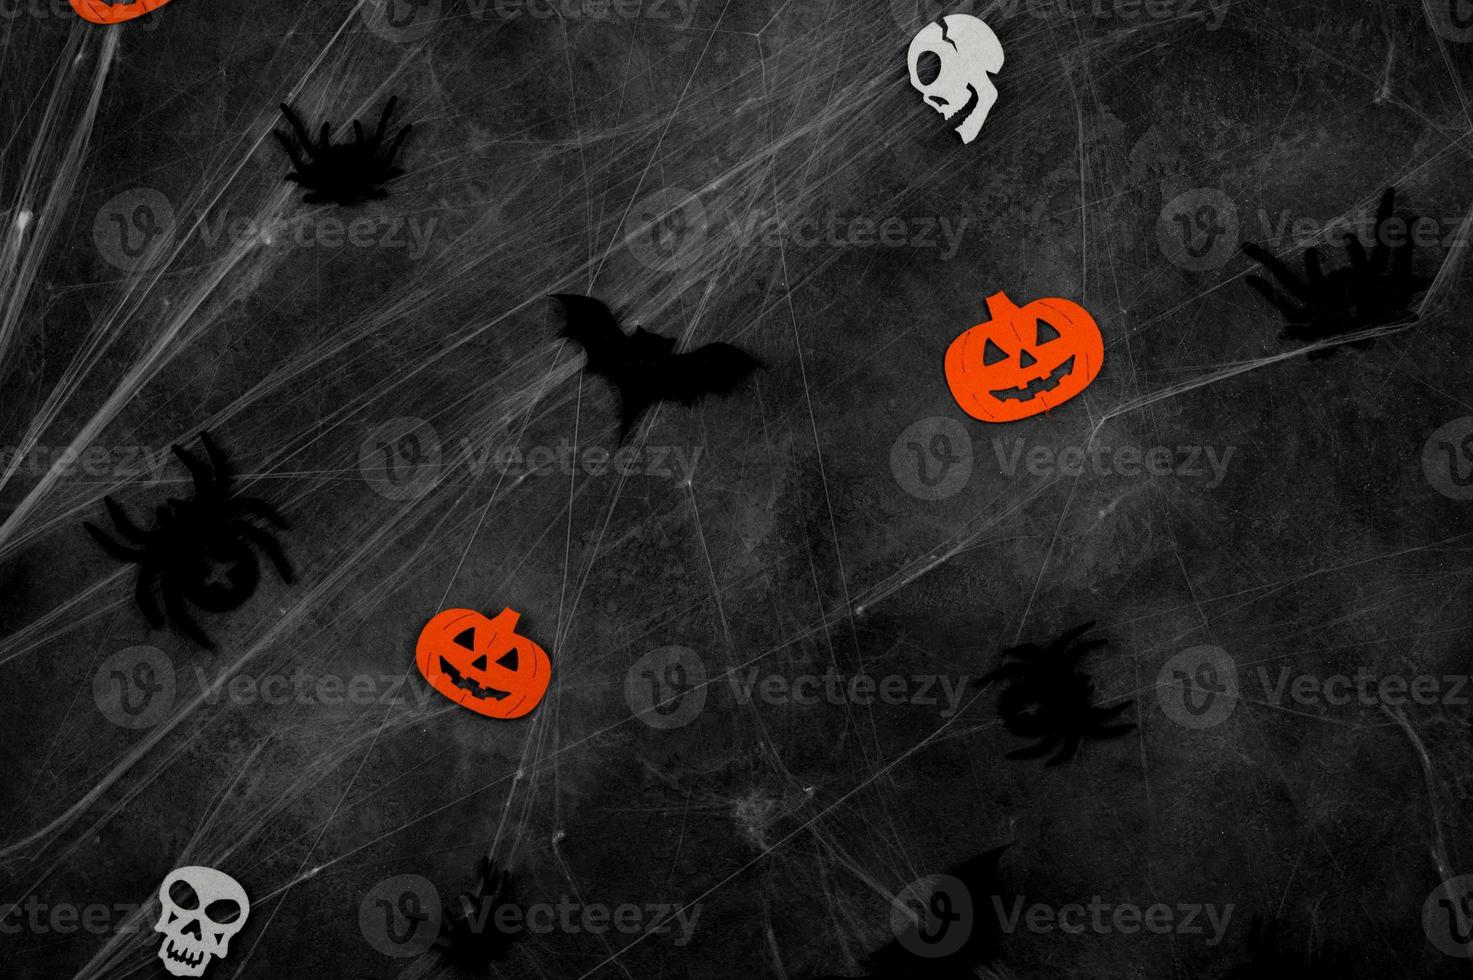 black flying bats, spiders,skulls and pumpkins on web over dark concrete background photo